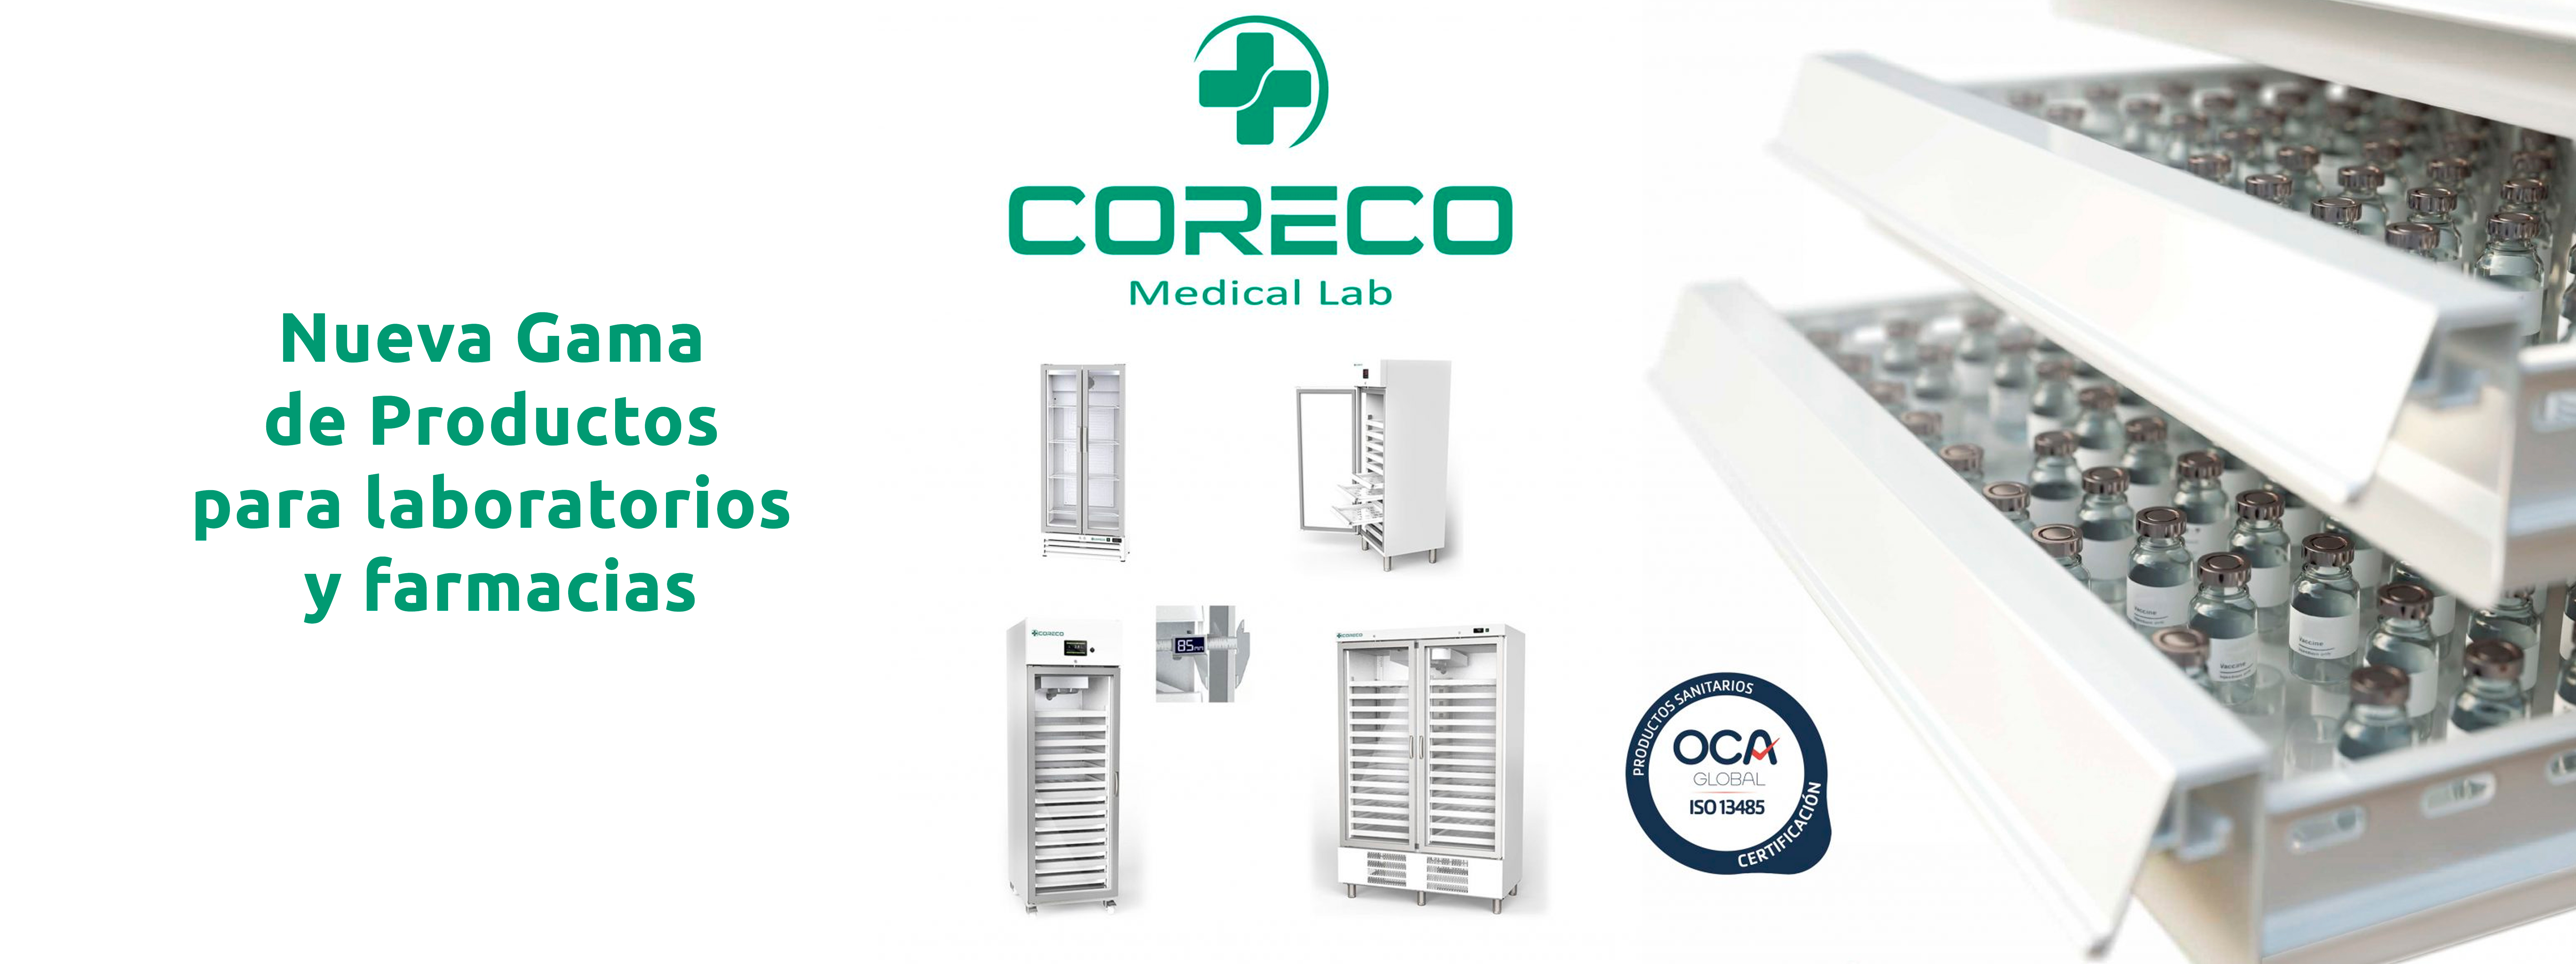 Coreco Medical Lab